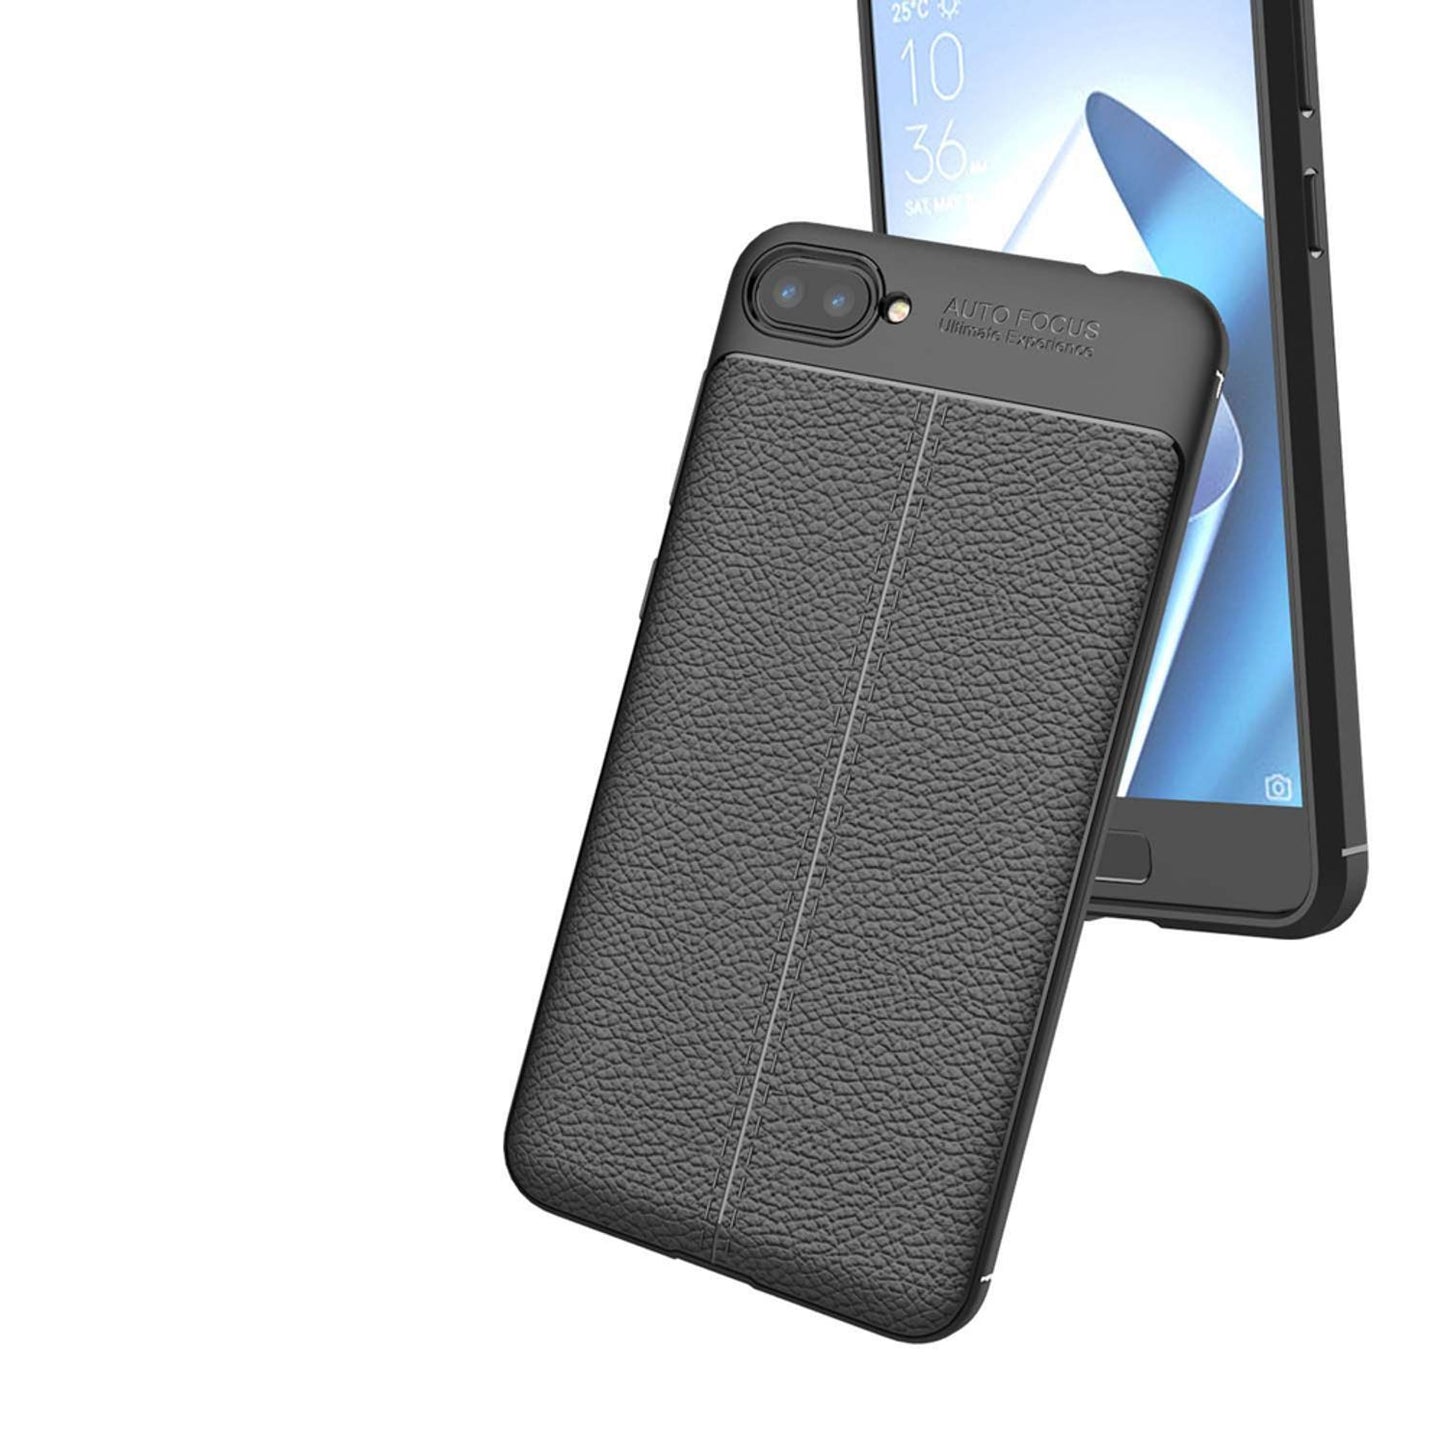 NALIA Hülle Leder-Look Handyhülle für ASUS ZenFone 4 Max 5,2", Silikon Case